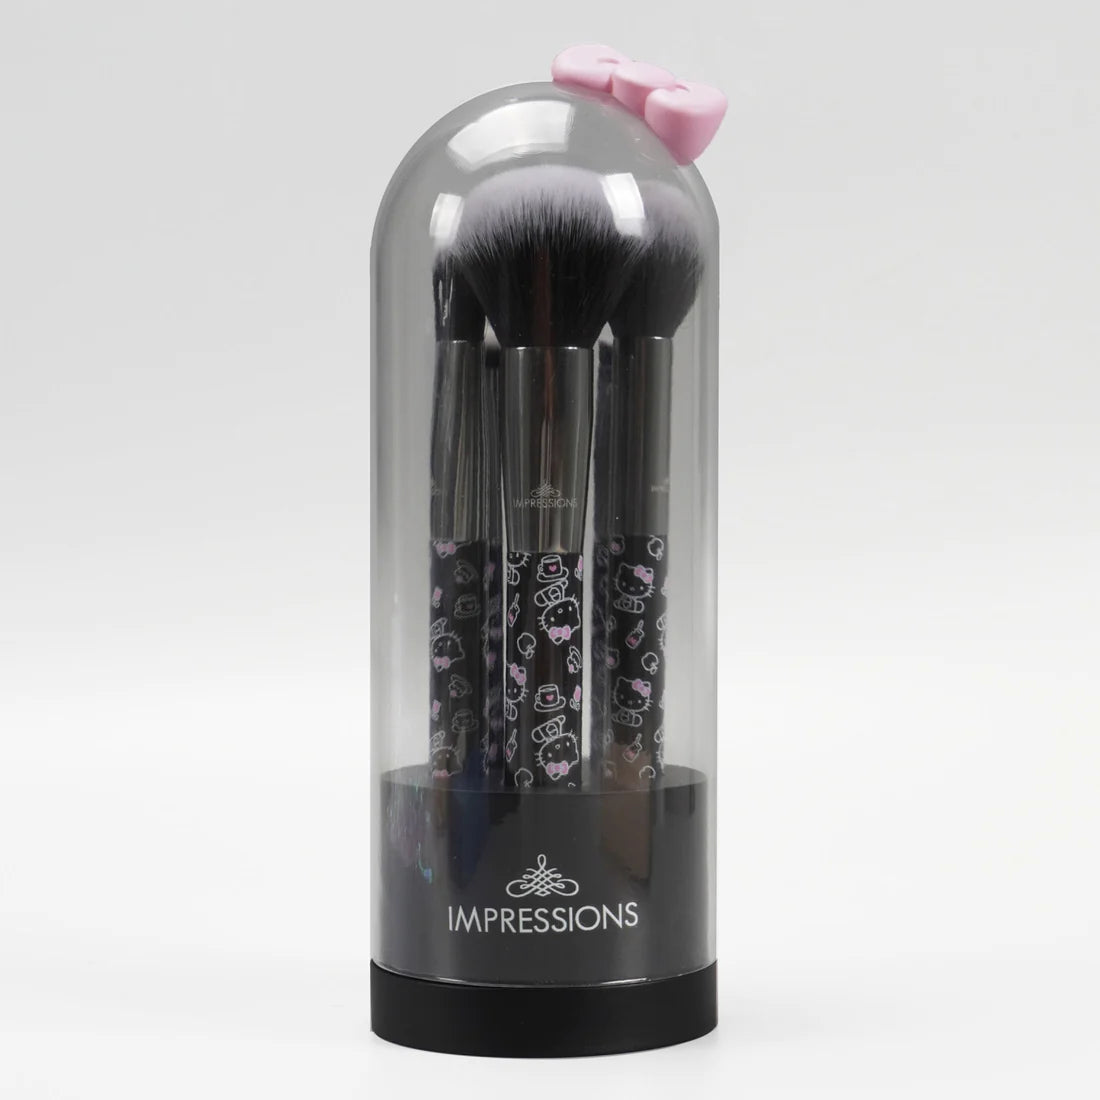 Hello Kitty "The Favorites" Bell Jar 6-PC Brush Gift Se